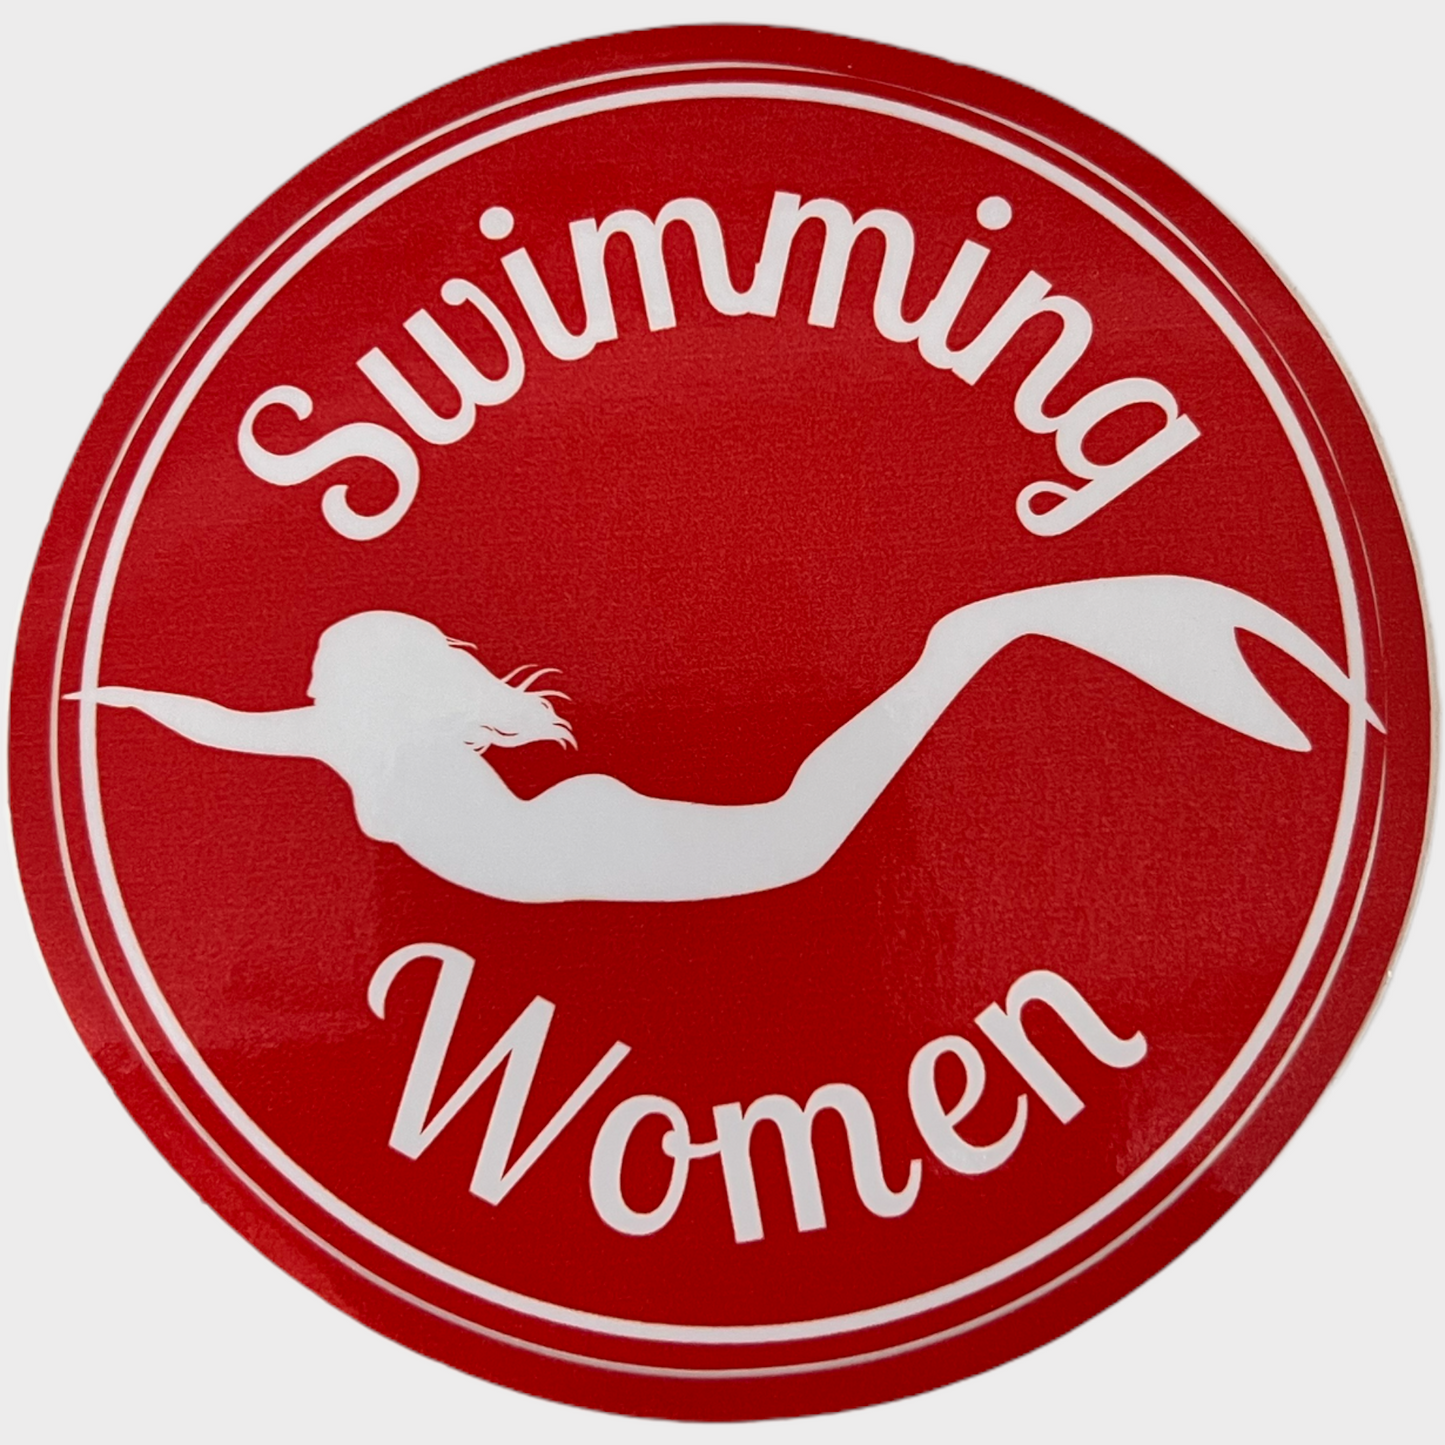 Swimming Women sticker